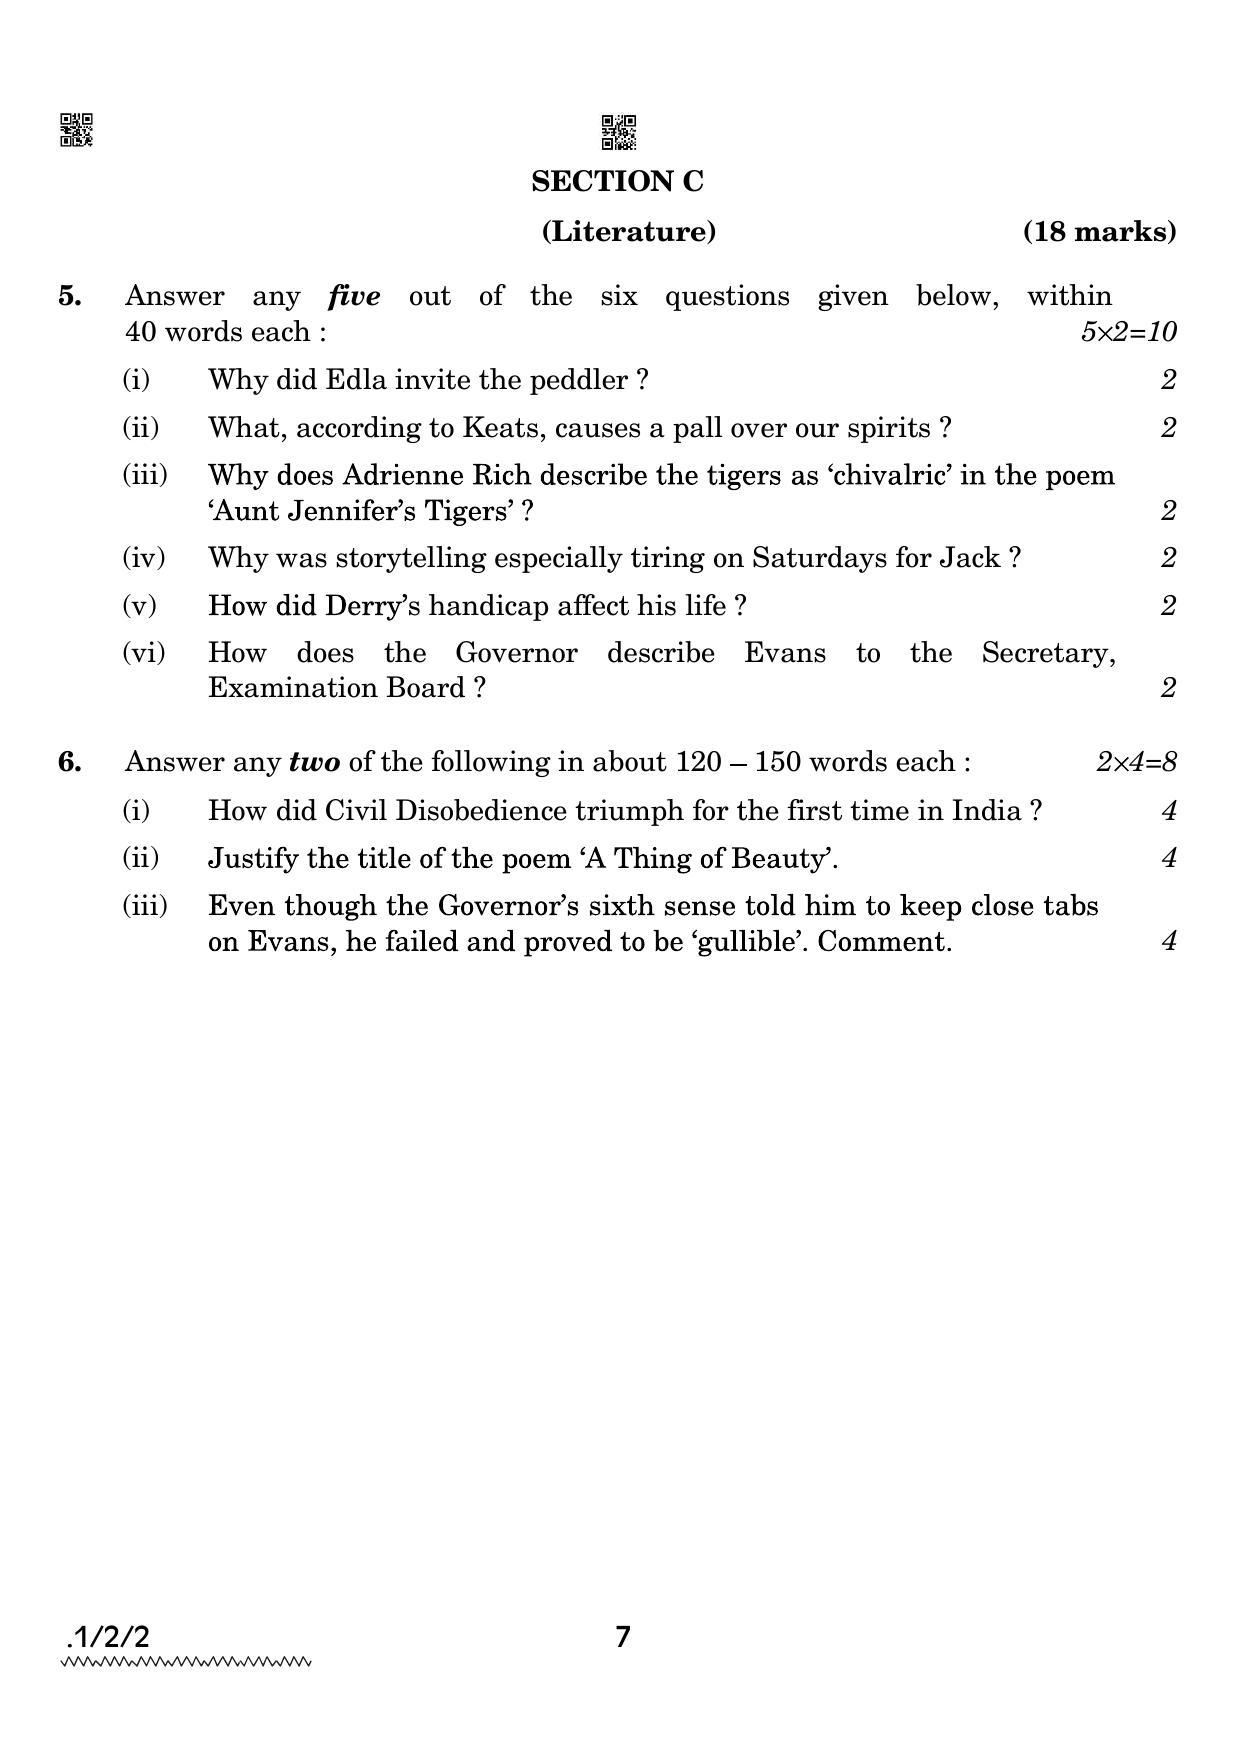 CBSE Class 12 1-2-2 English Core 2022 Question Paper - Page 7